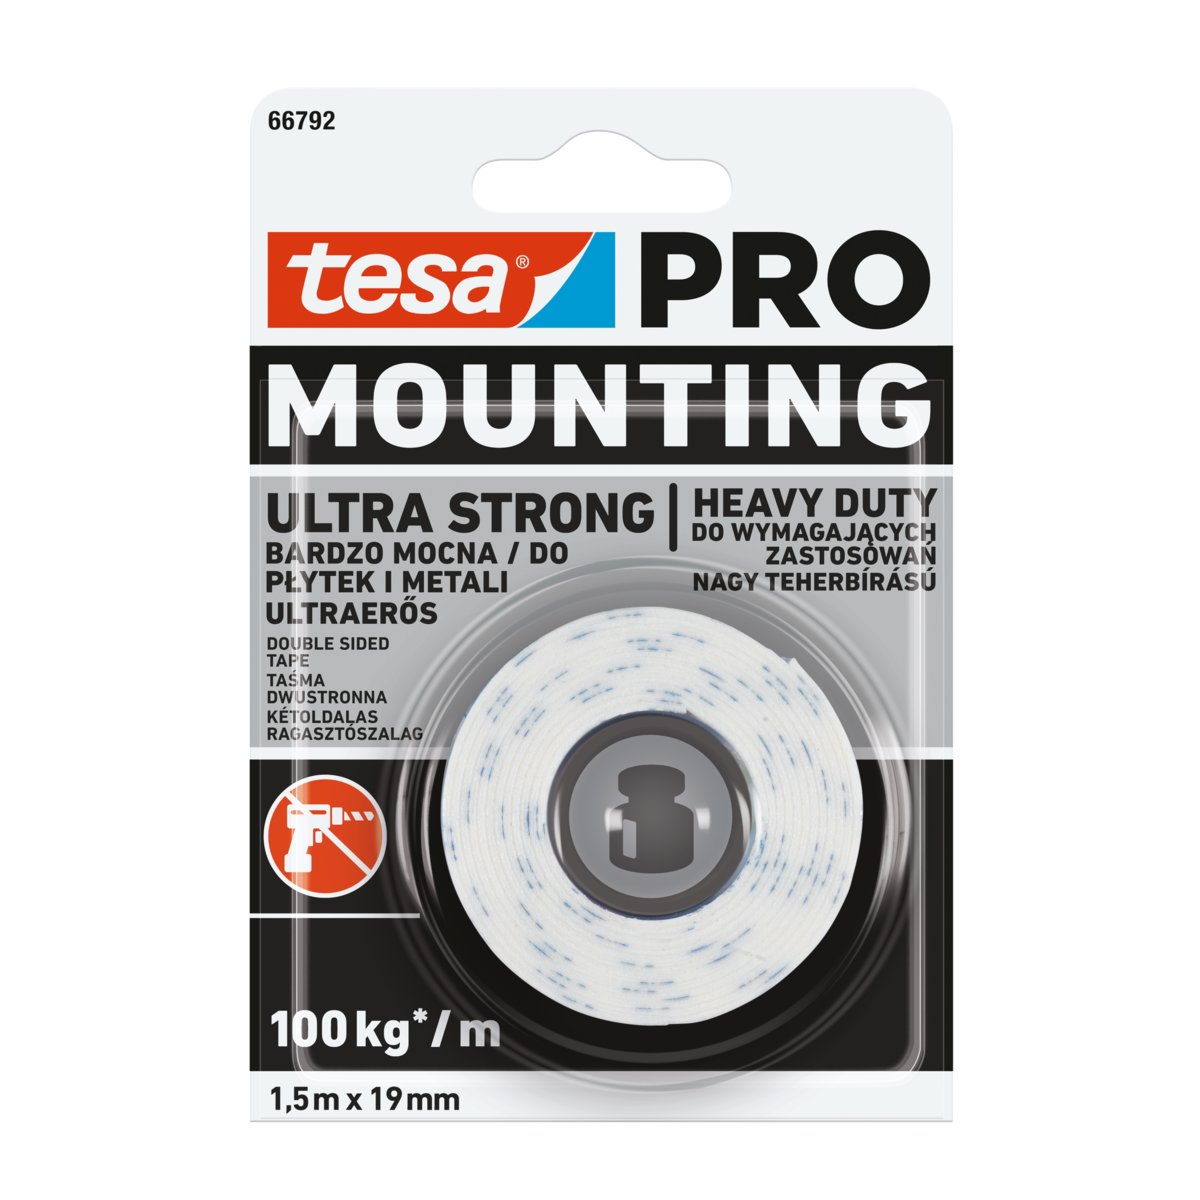 Taśma Montażowa Tesa Pro Mounting 1,5Mx19Mm Mocna